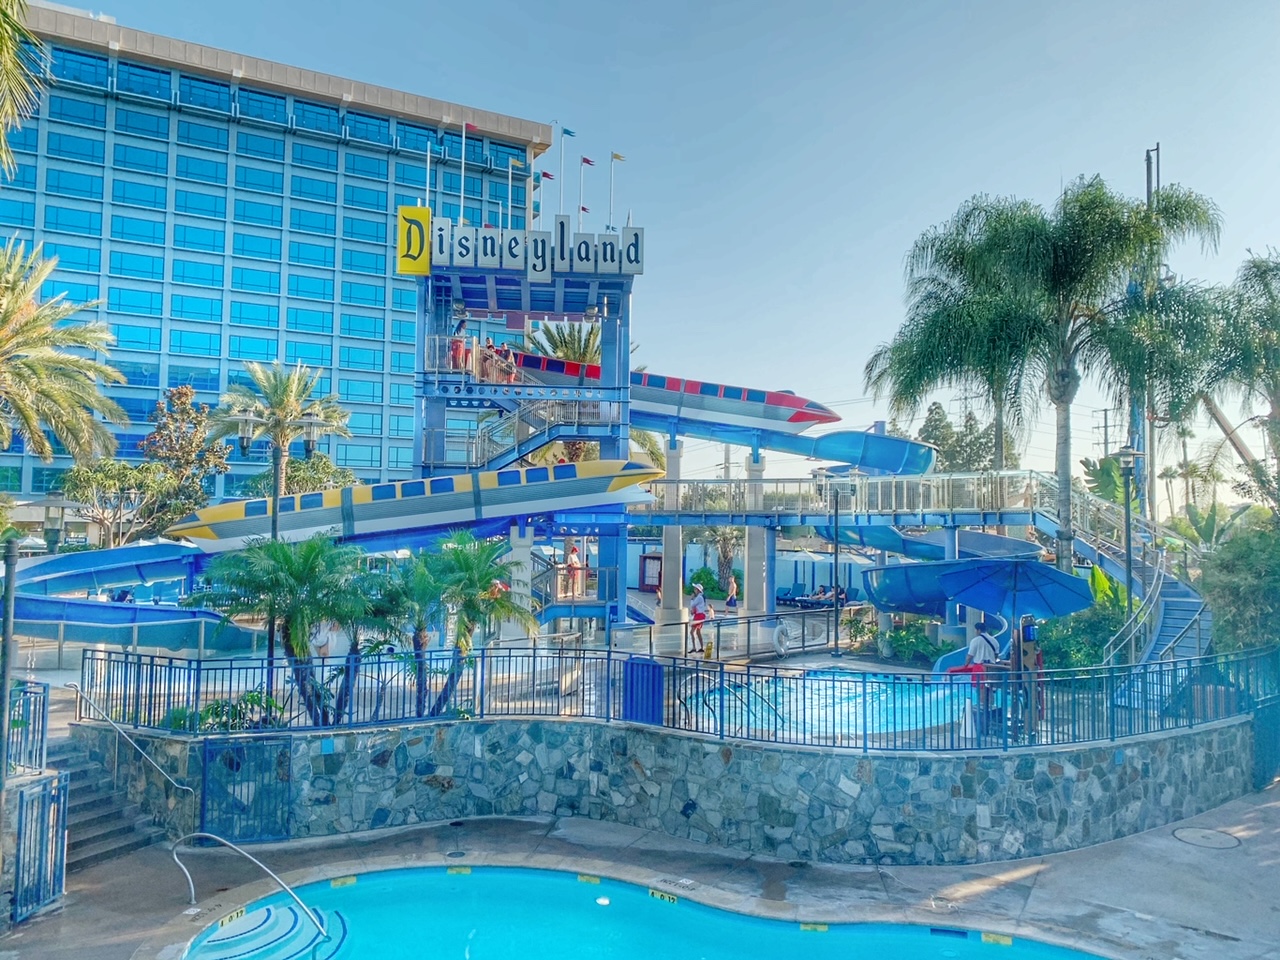 Disneyland hotel pool